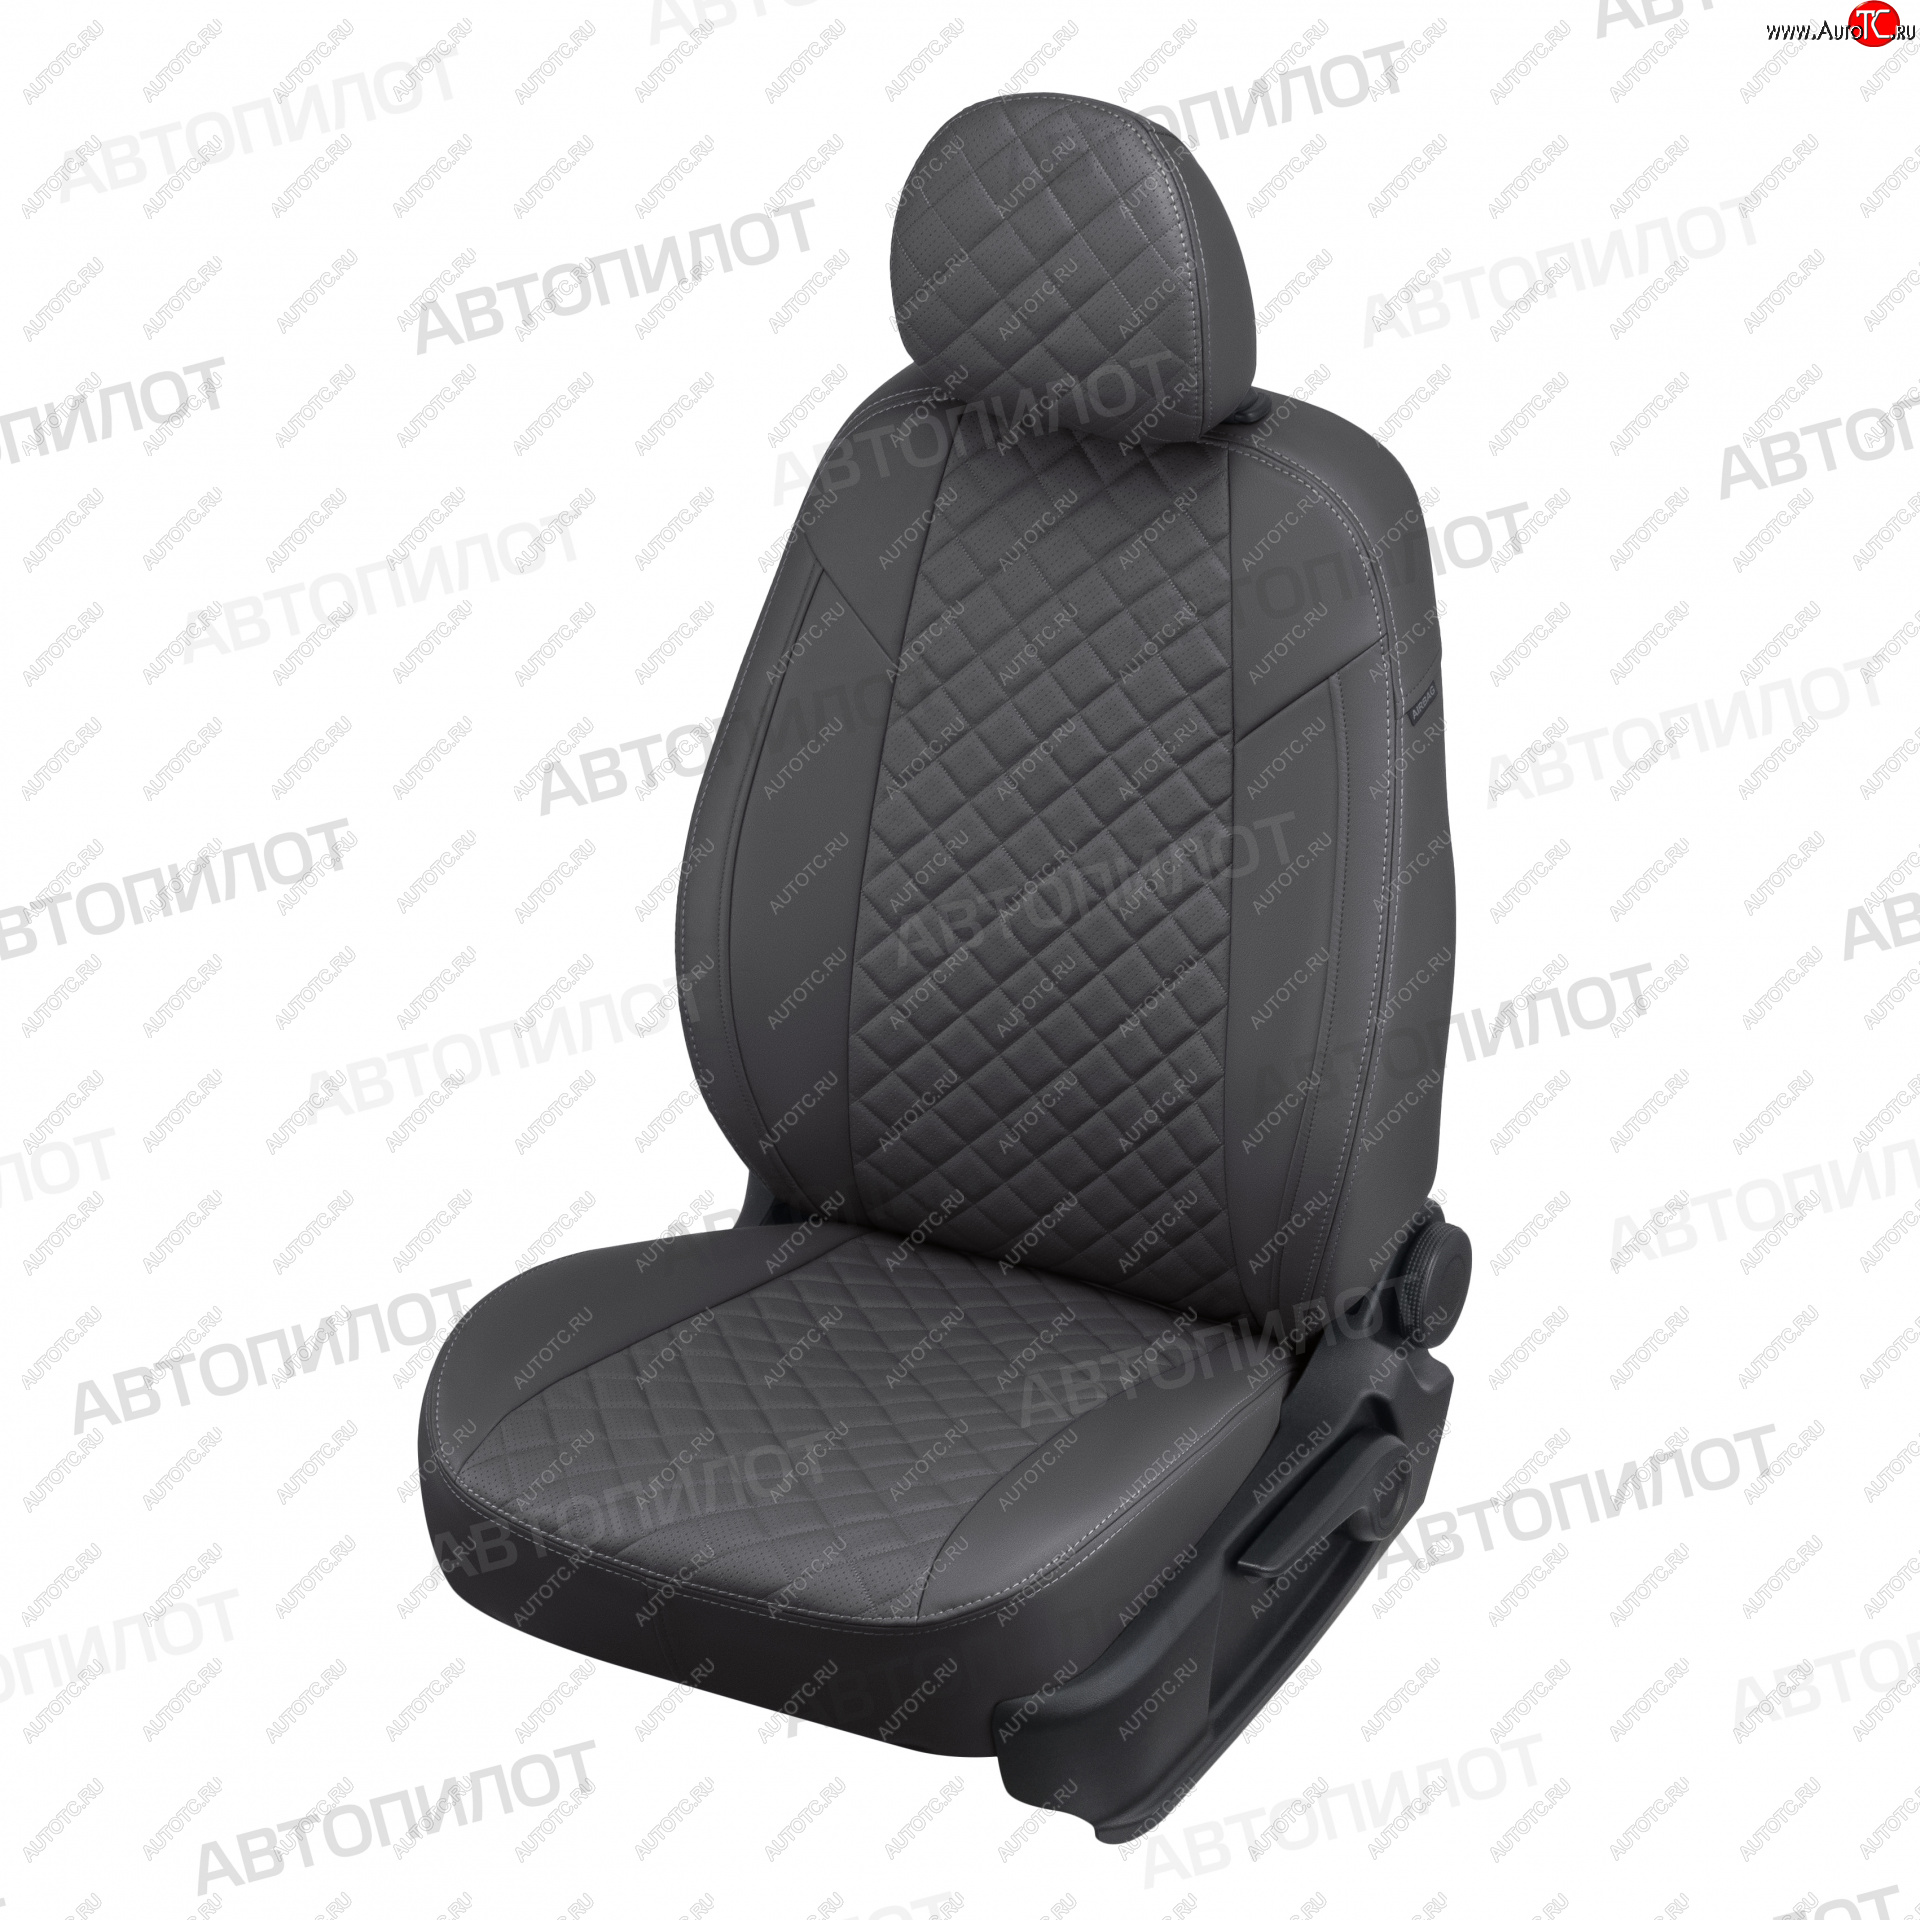 7 799 р. Чехлы сидений (экокожа) Автопилот Ромб  KIA Sportage  3 SL (2010-2016) (темно-серый)  с доставкой в г. Калуга